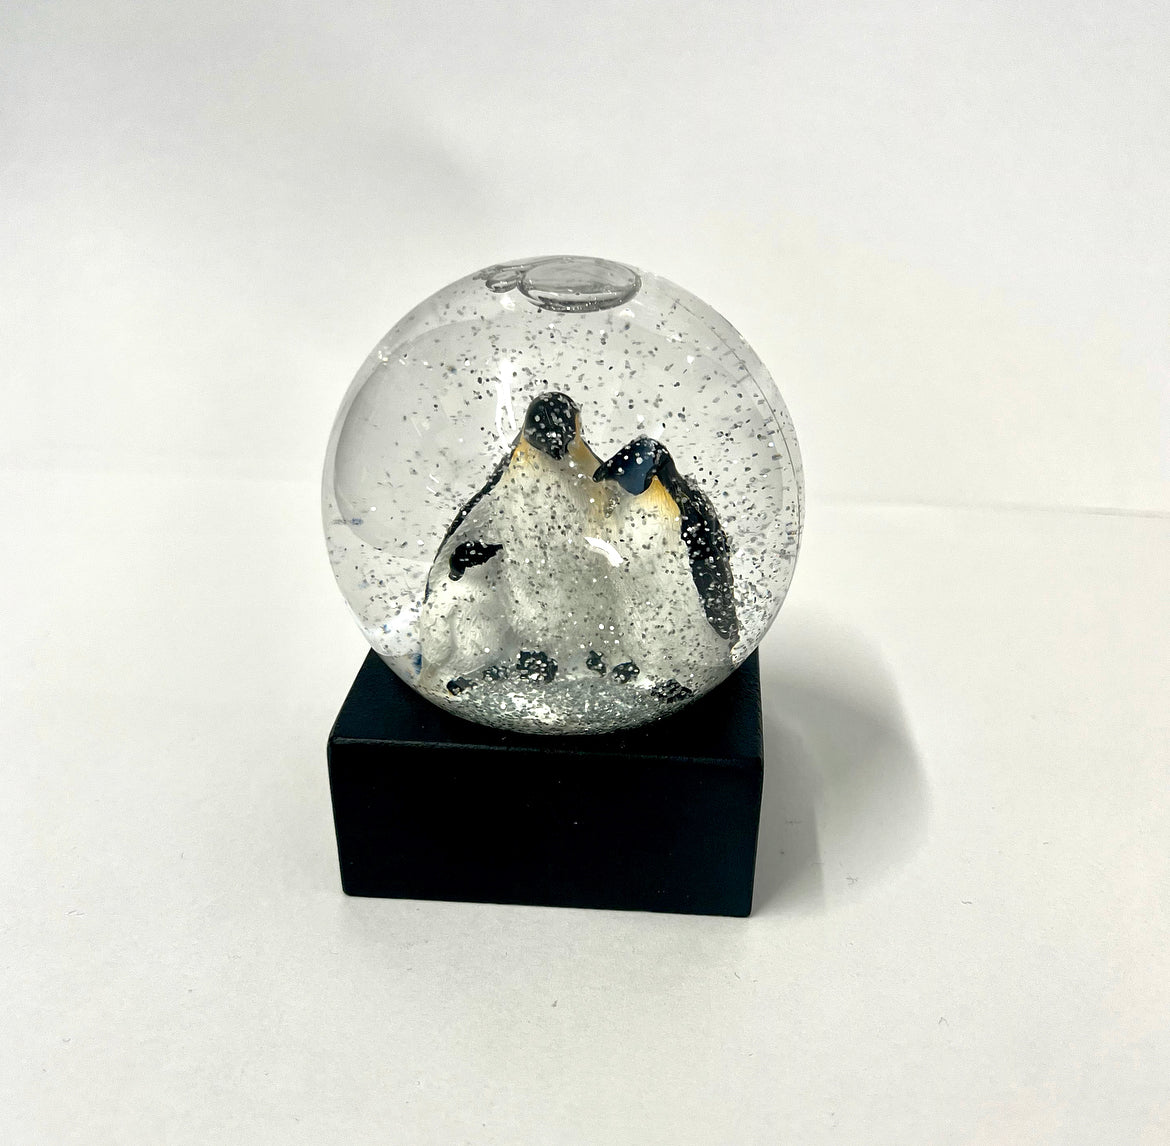 Seal or Penguin Snow Globe